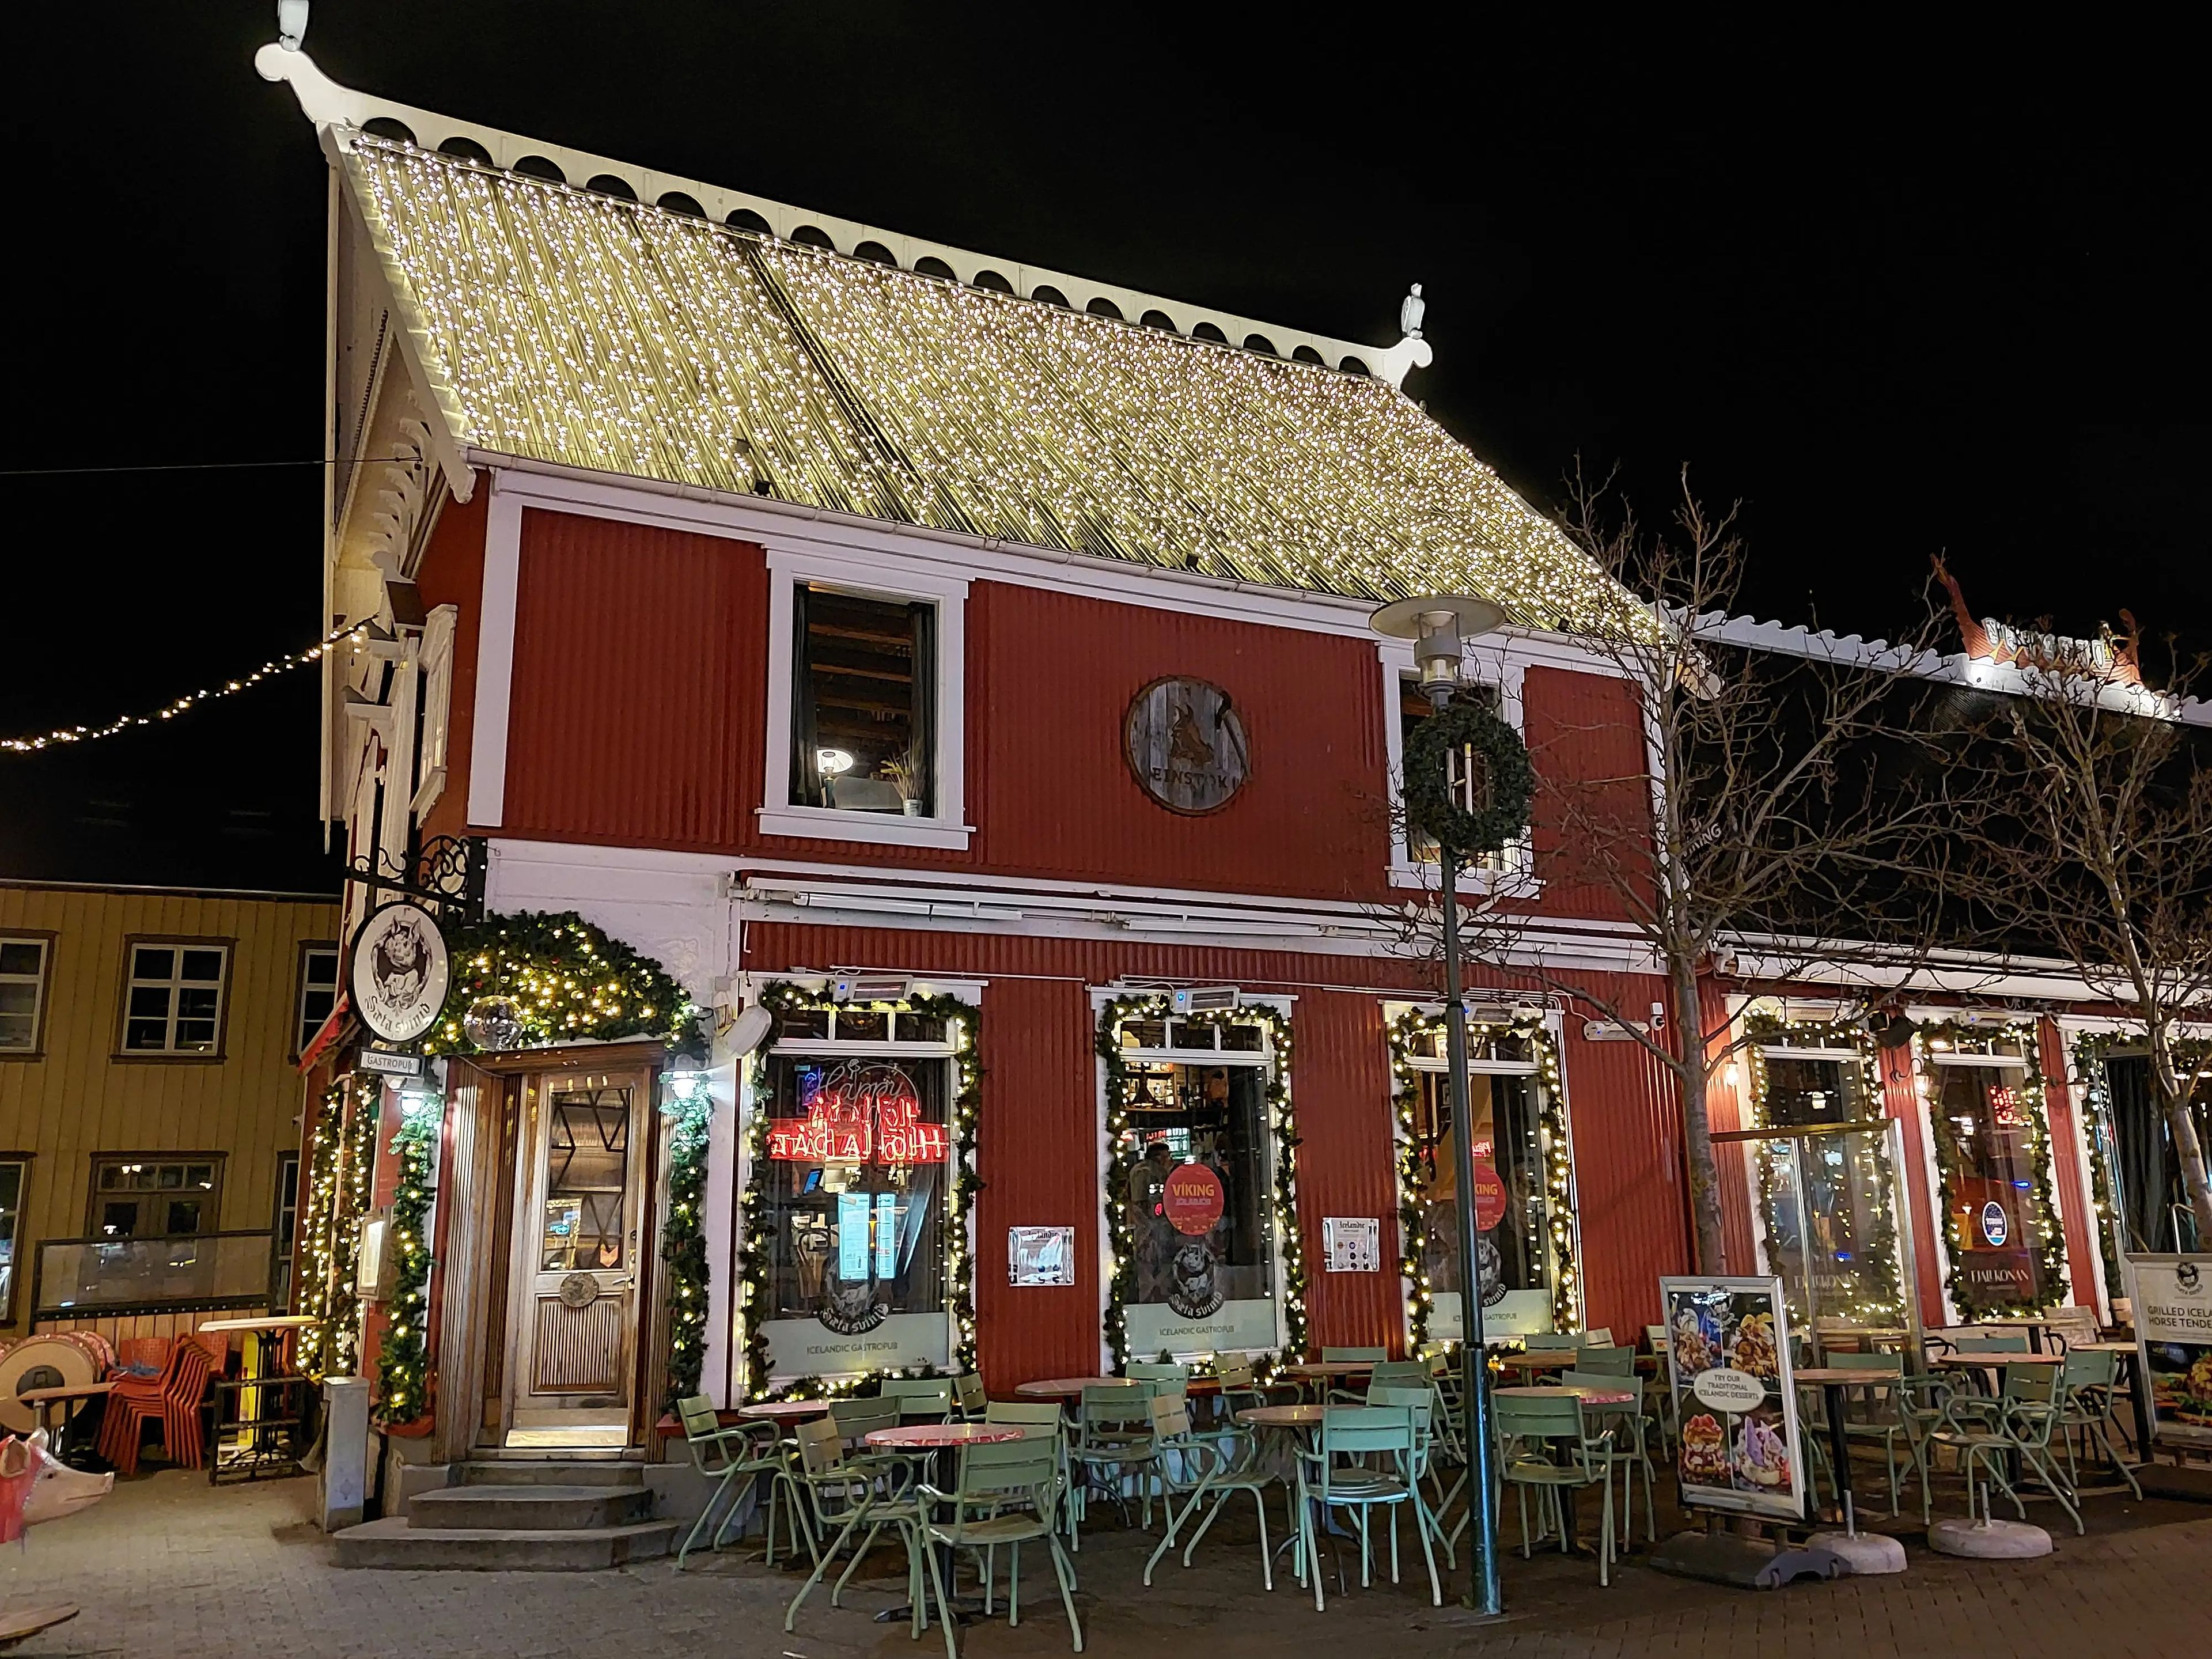 Este restaurante de Reikiavik estaba adornado con lucecitas que le daban un aspecto cálido y acogedor.